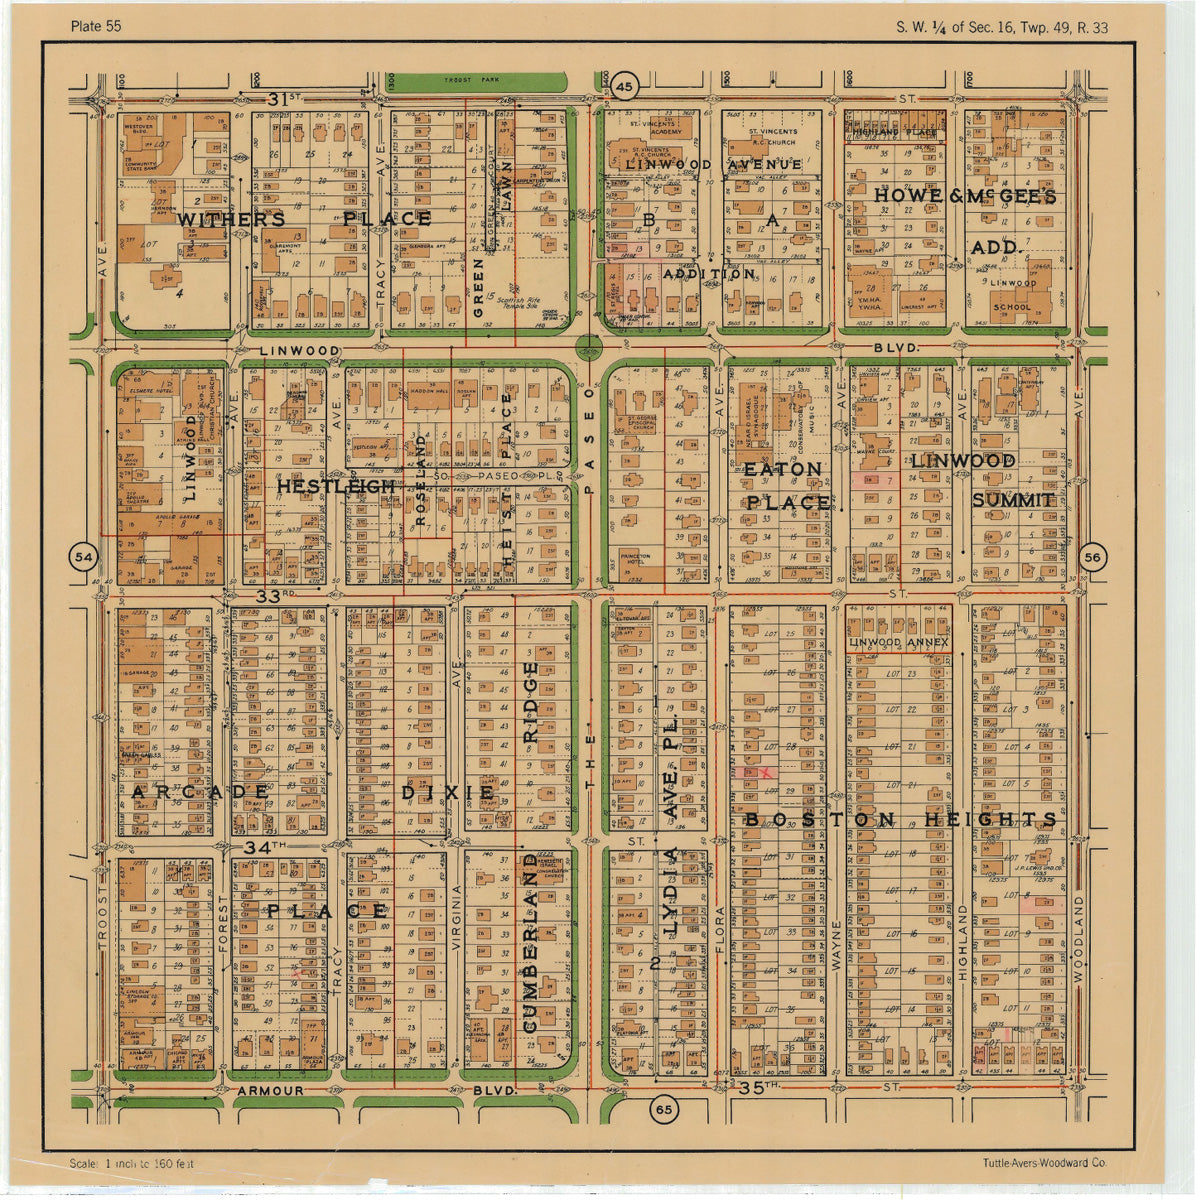 Kansas City 1925 Neighborhood Map - Plate #55 31st-Armour Troost-Woodland